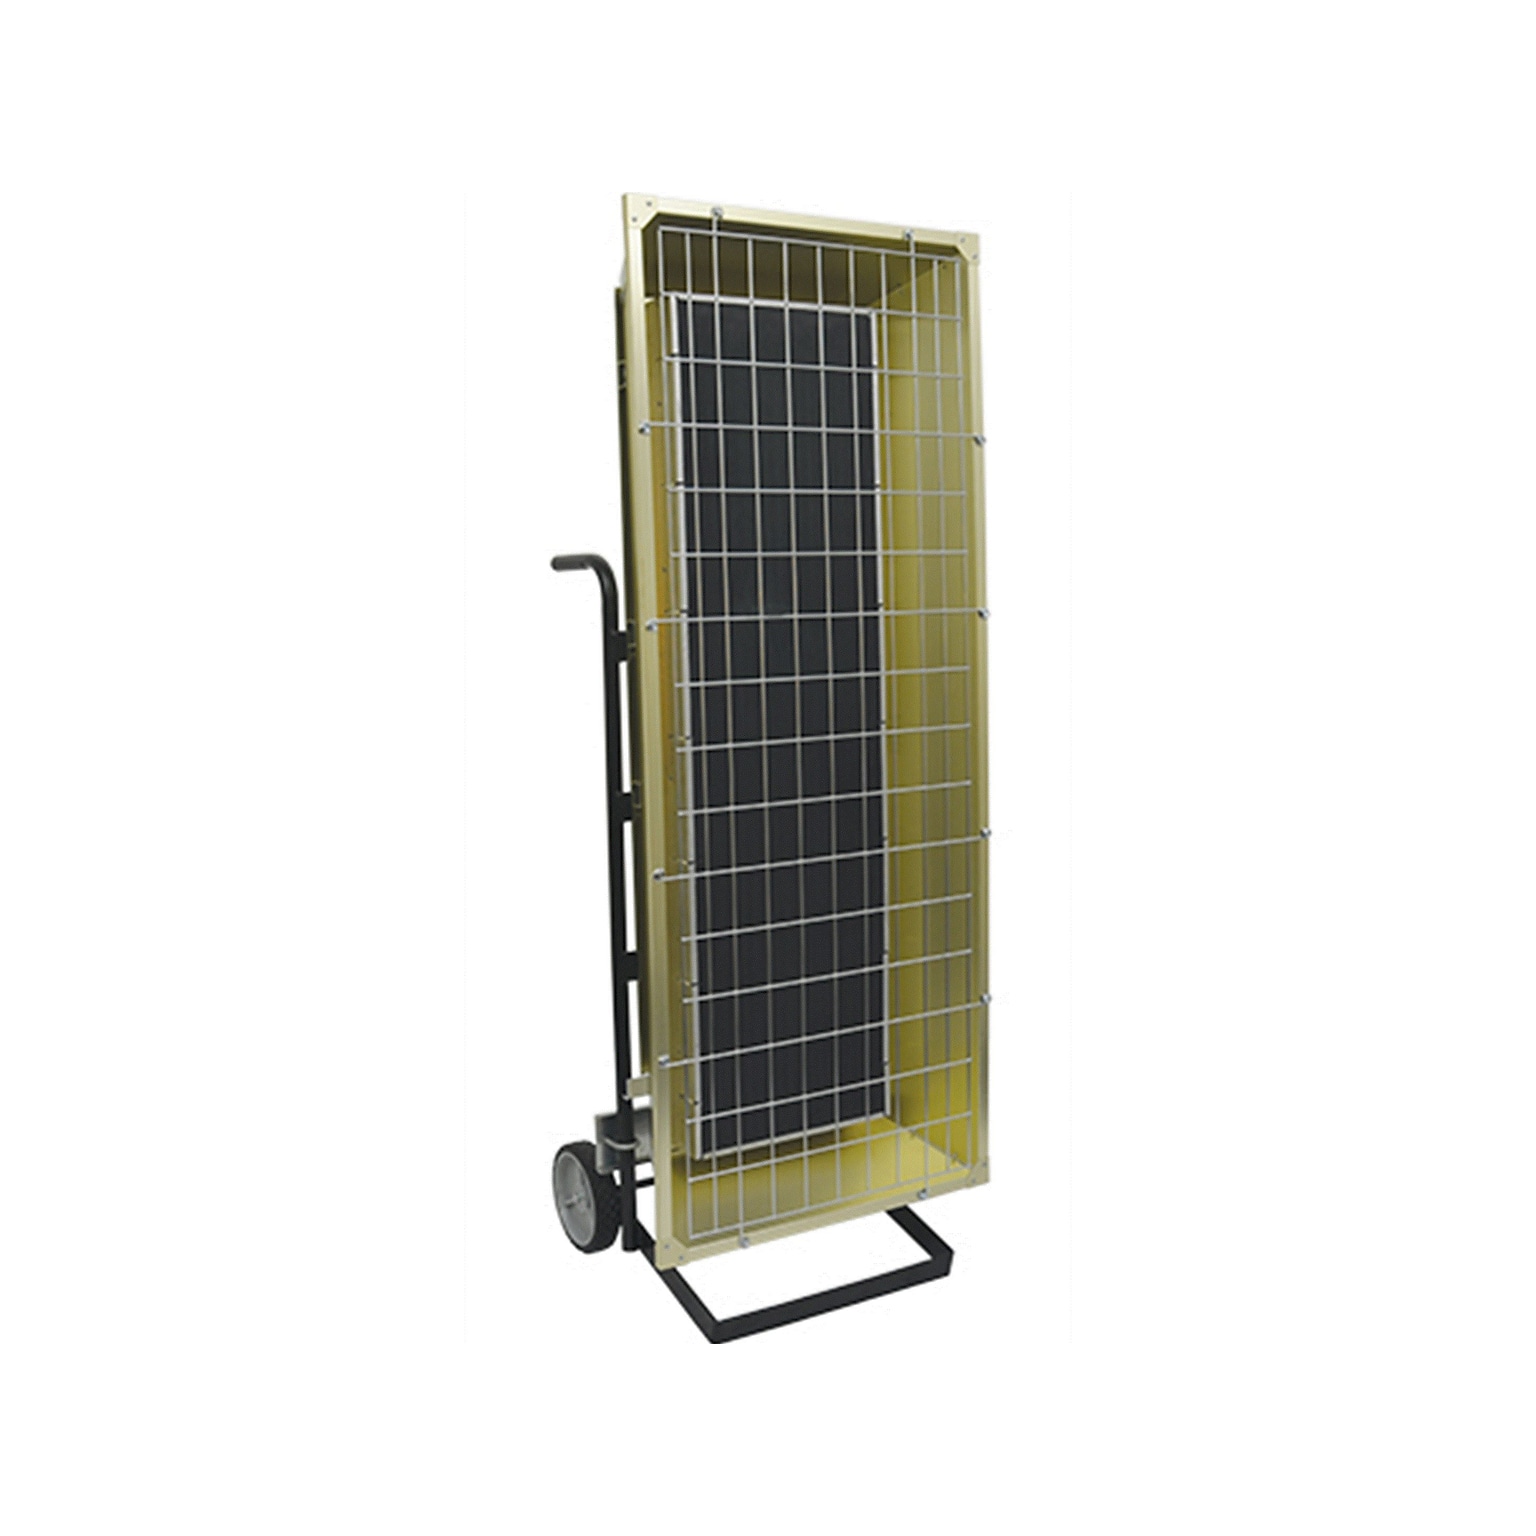 TPI Corporation Fostoria FSP 9500-Watt 32414 BTU Portable Indoor/Outdoor Infrared Electric Heater, Gold (04884902)